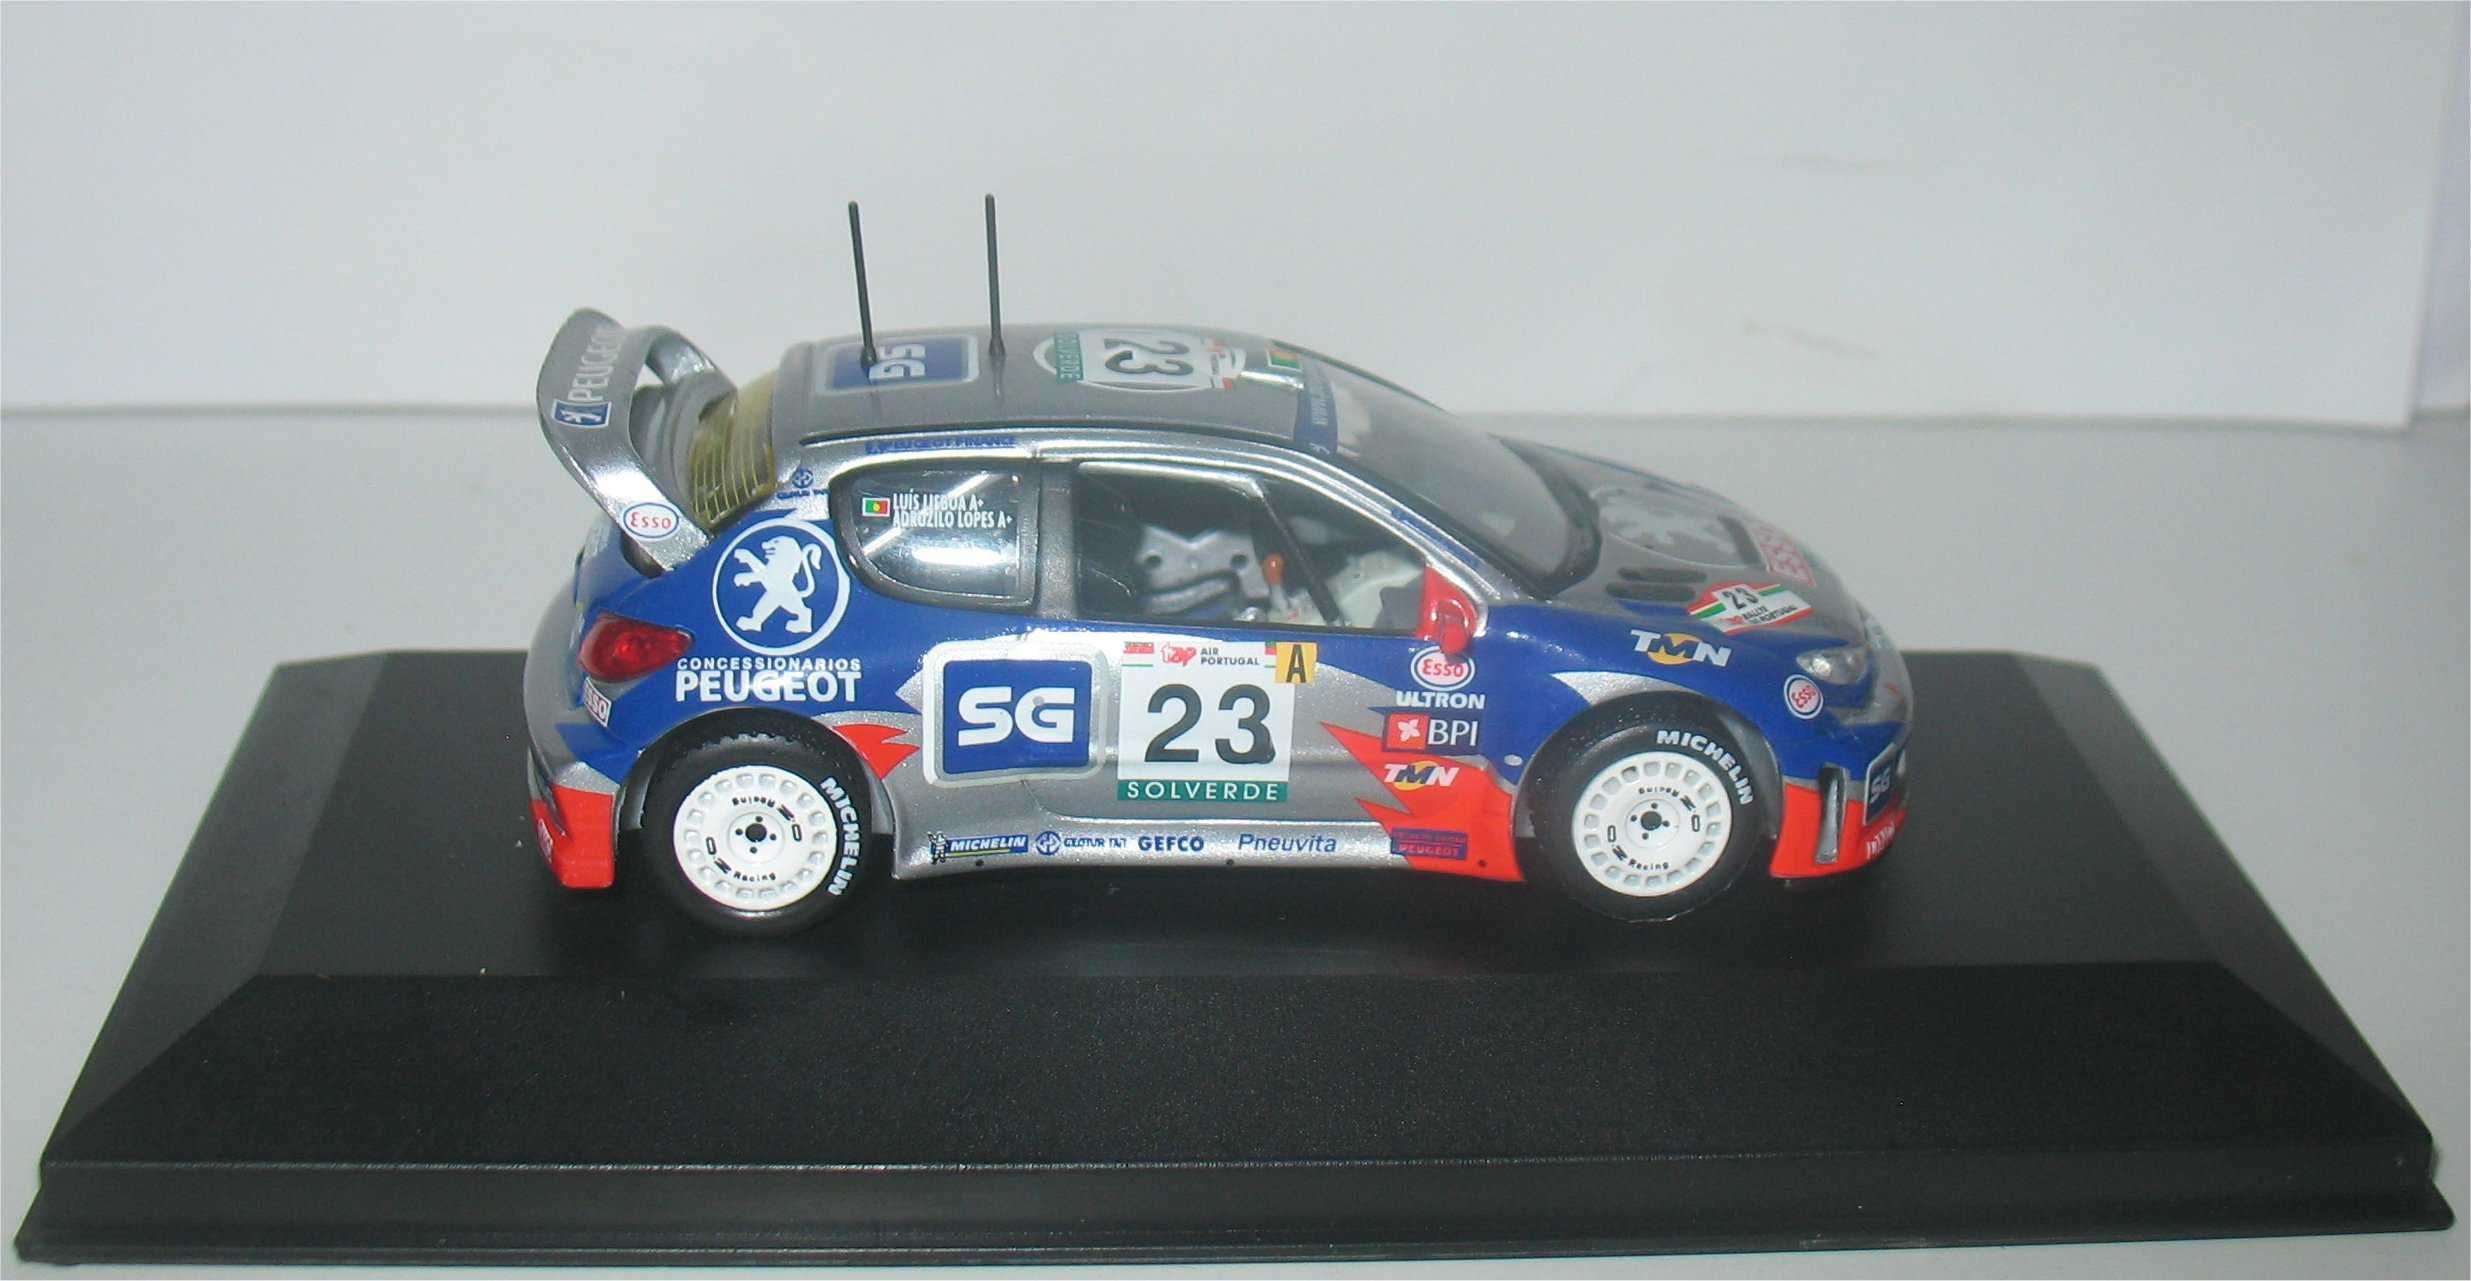 Ixo - Peugeot 206 WRC - Rally de Portugal 2001 - Adruzilo Lopes